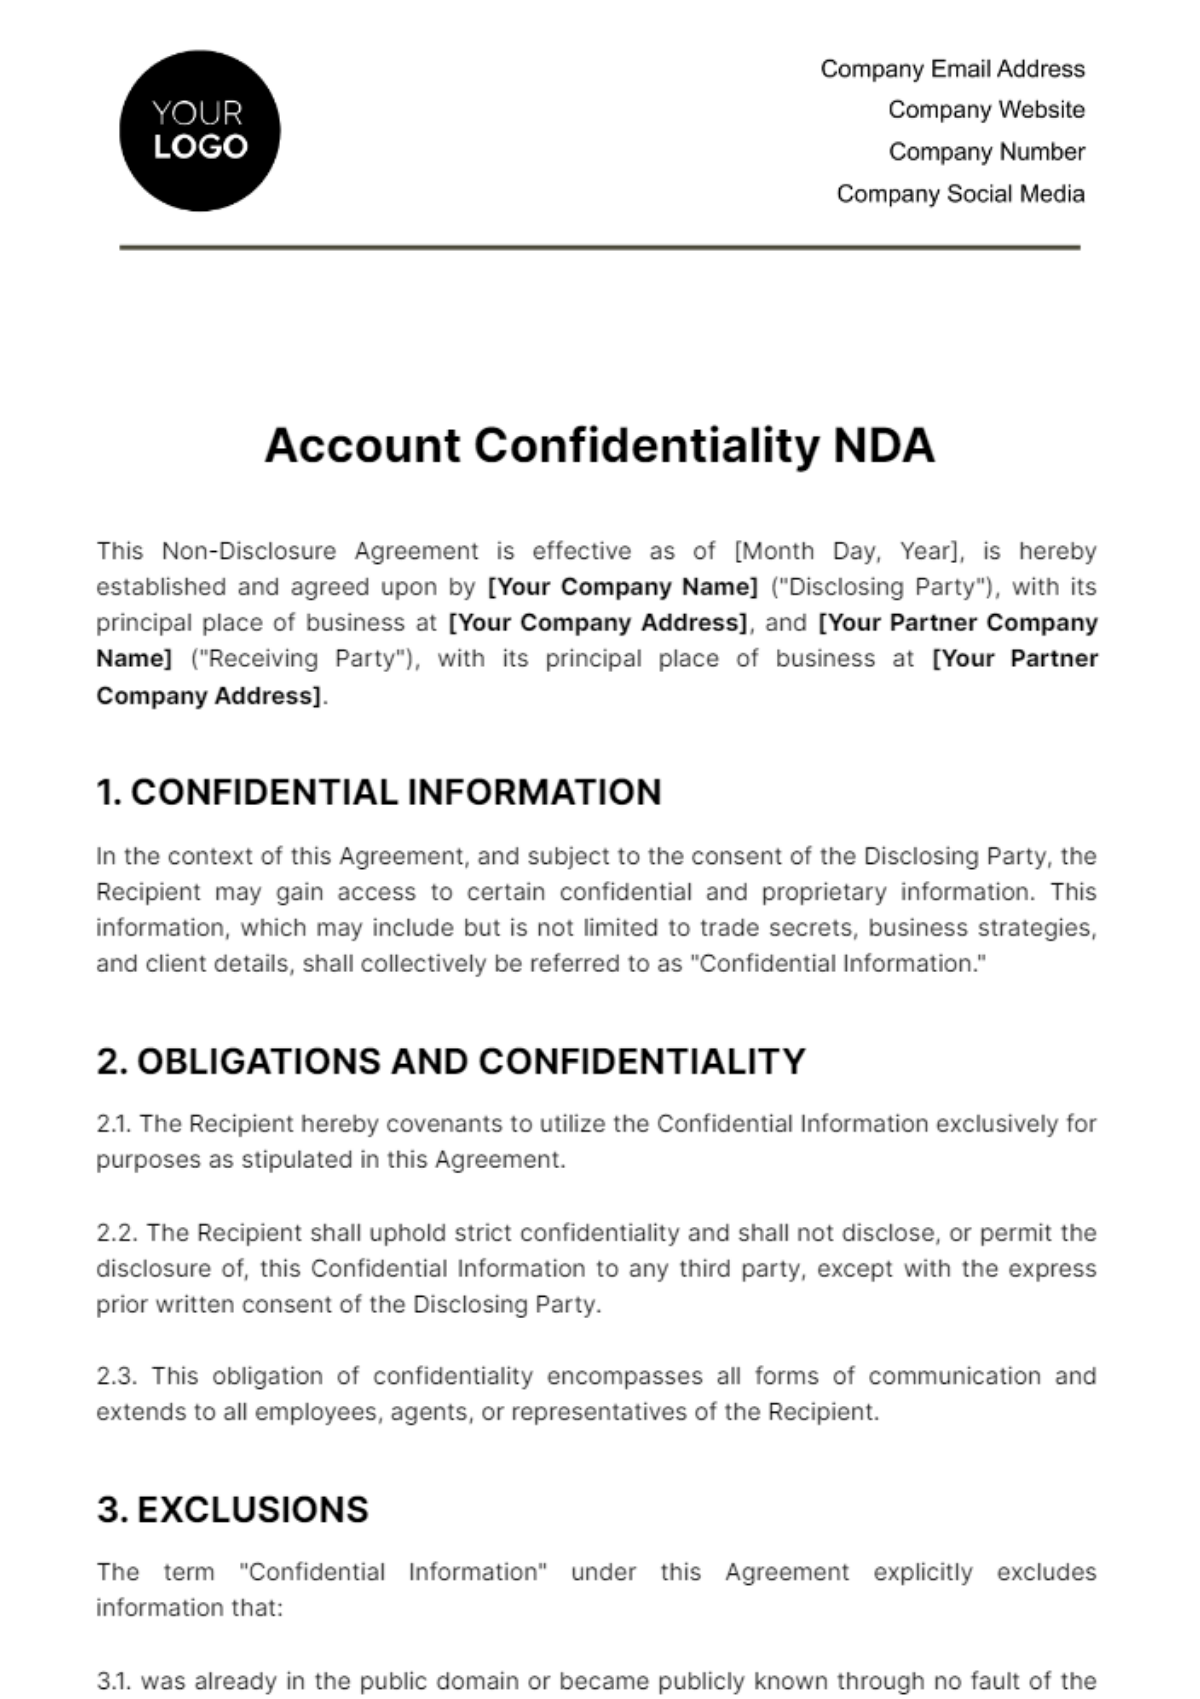 Account Confidentiality NDA Template